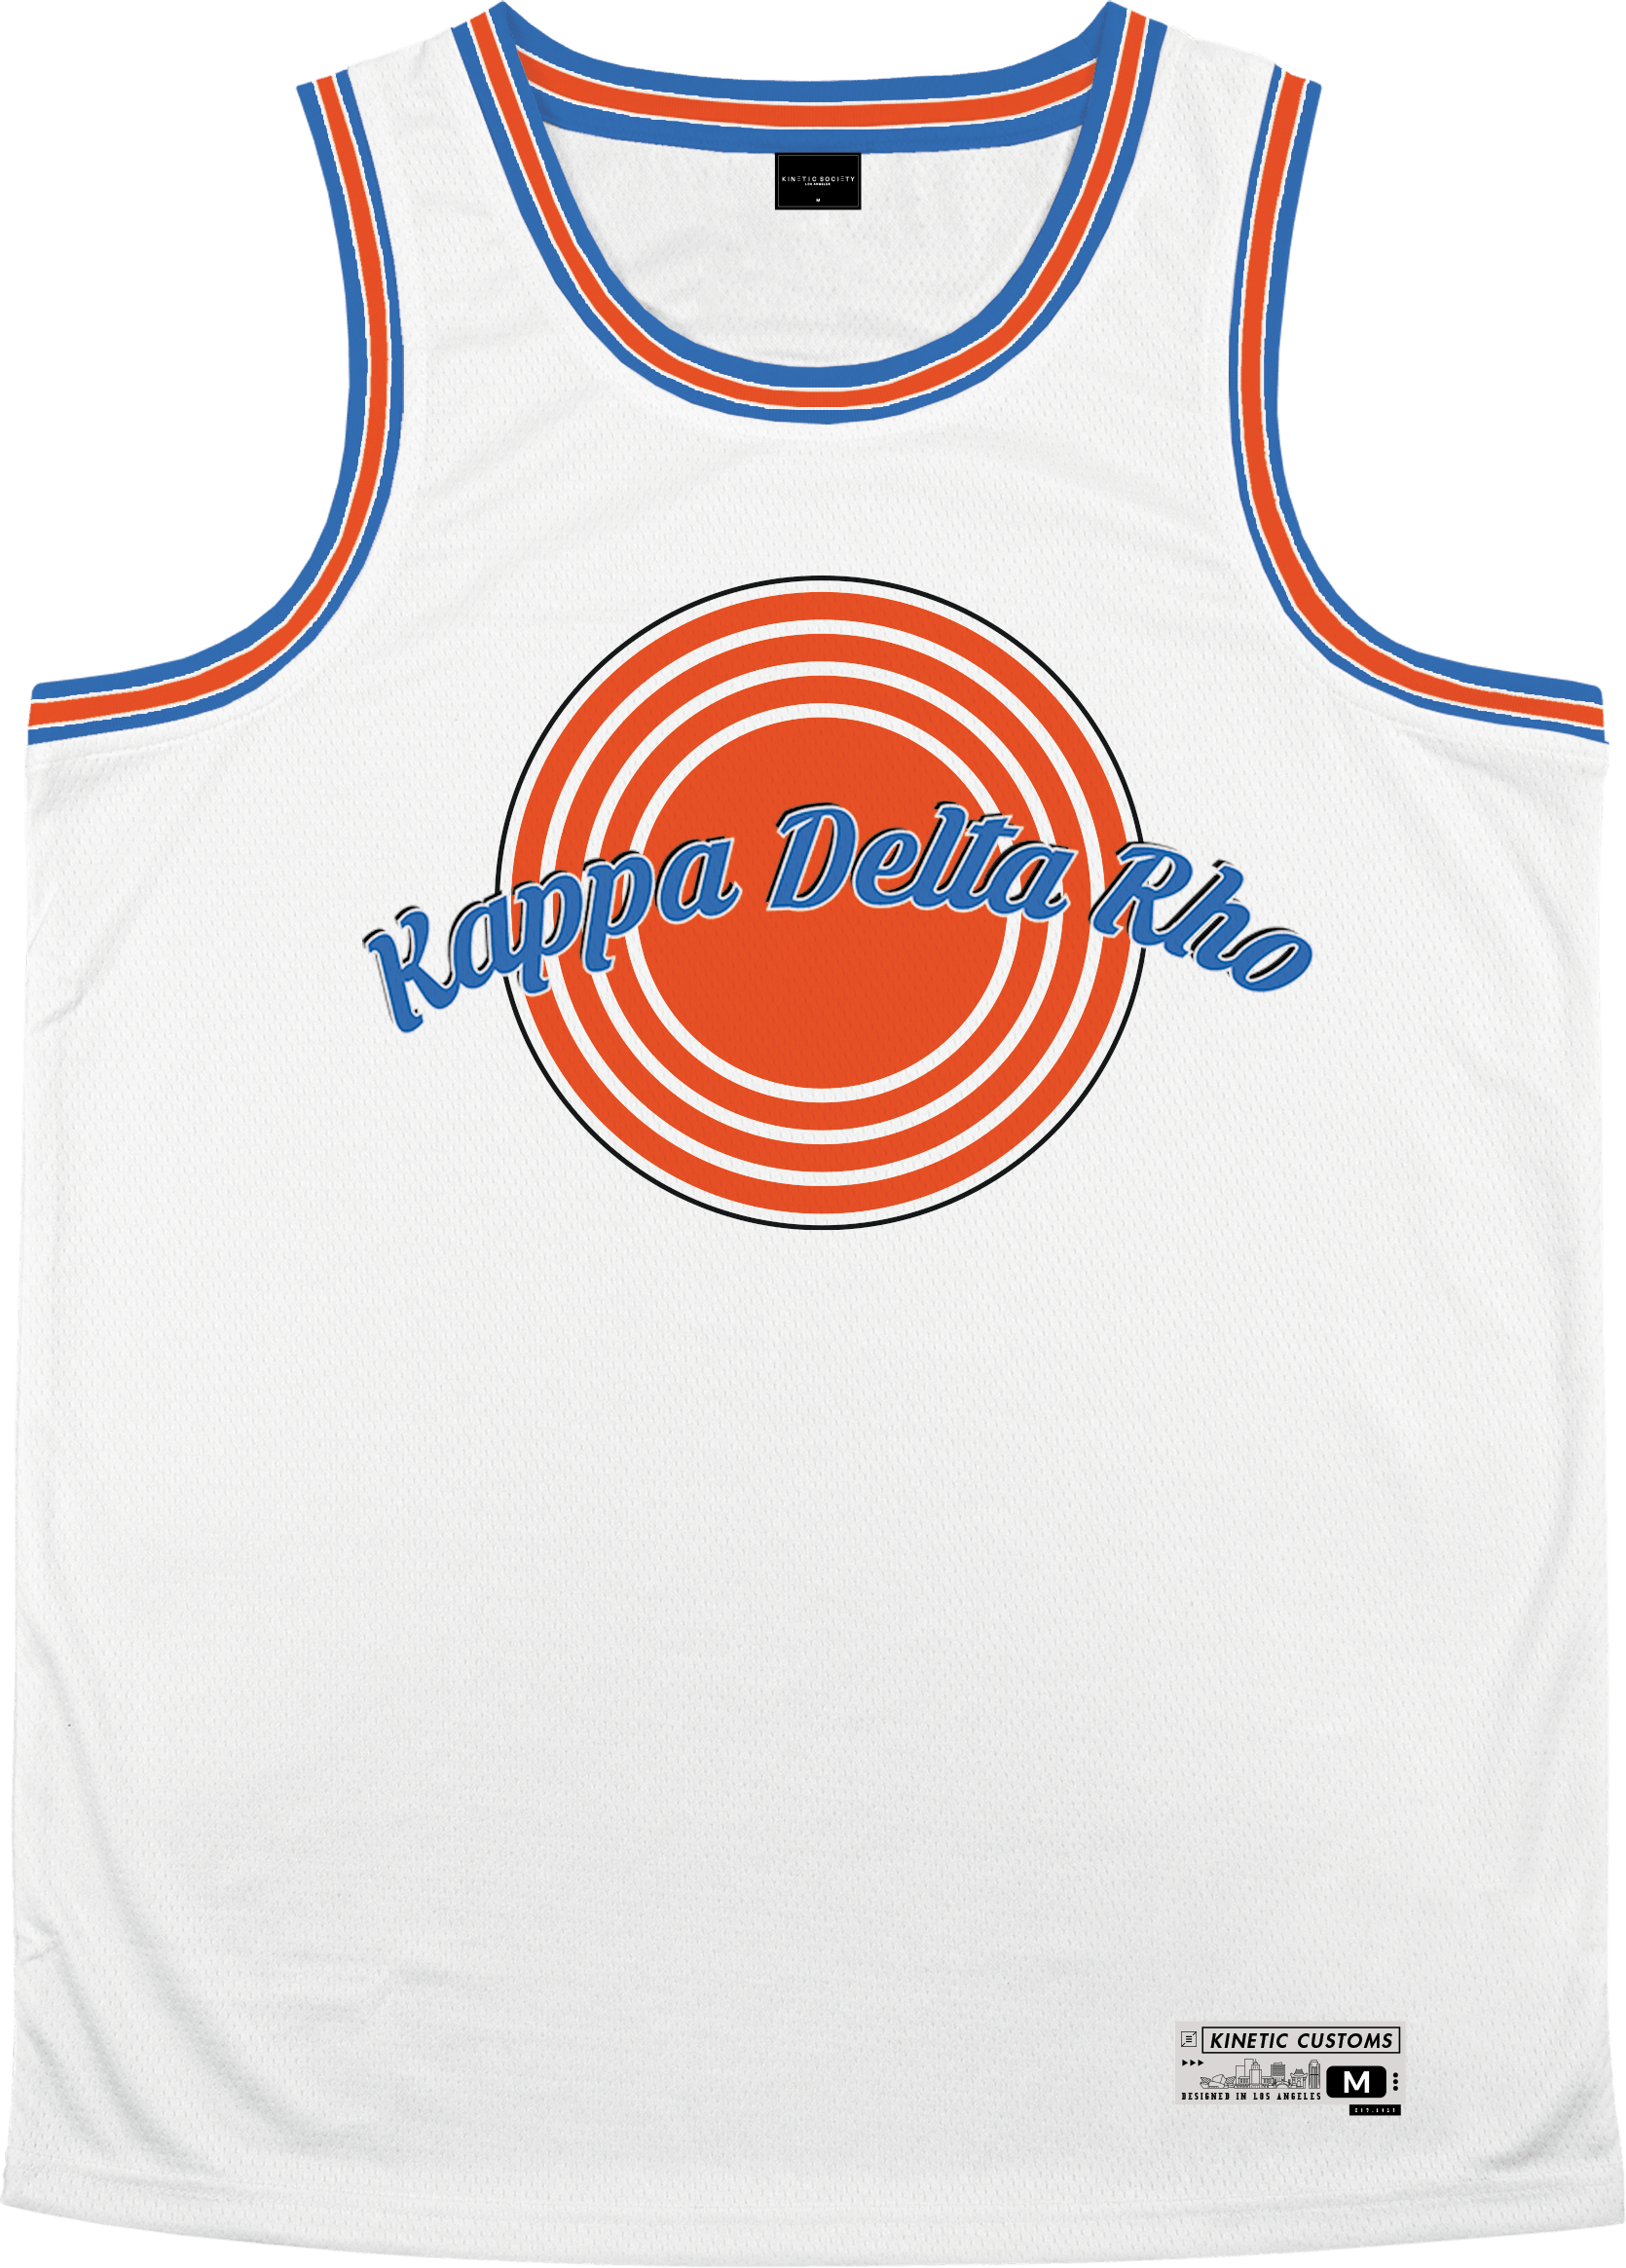 Kappa Delta Rho - Vintage Basketball Jersey Premium Basketball Kinetic Society LLC 